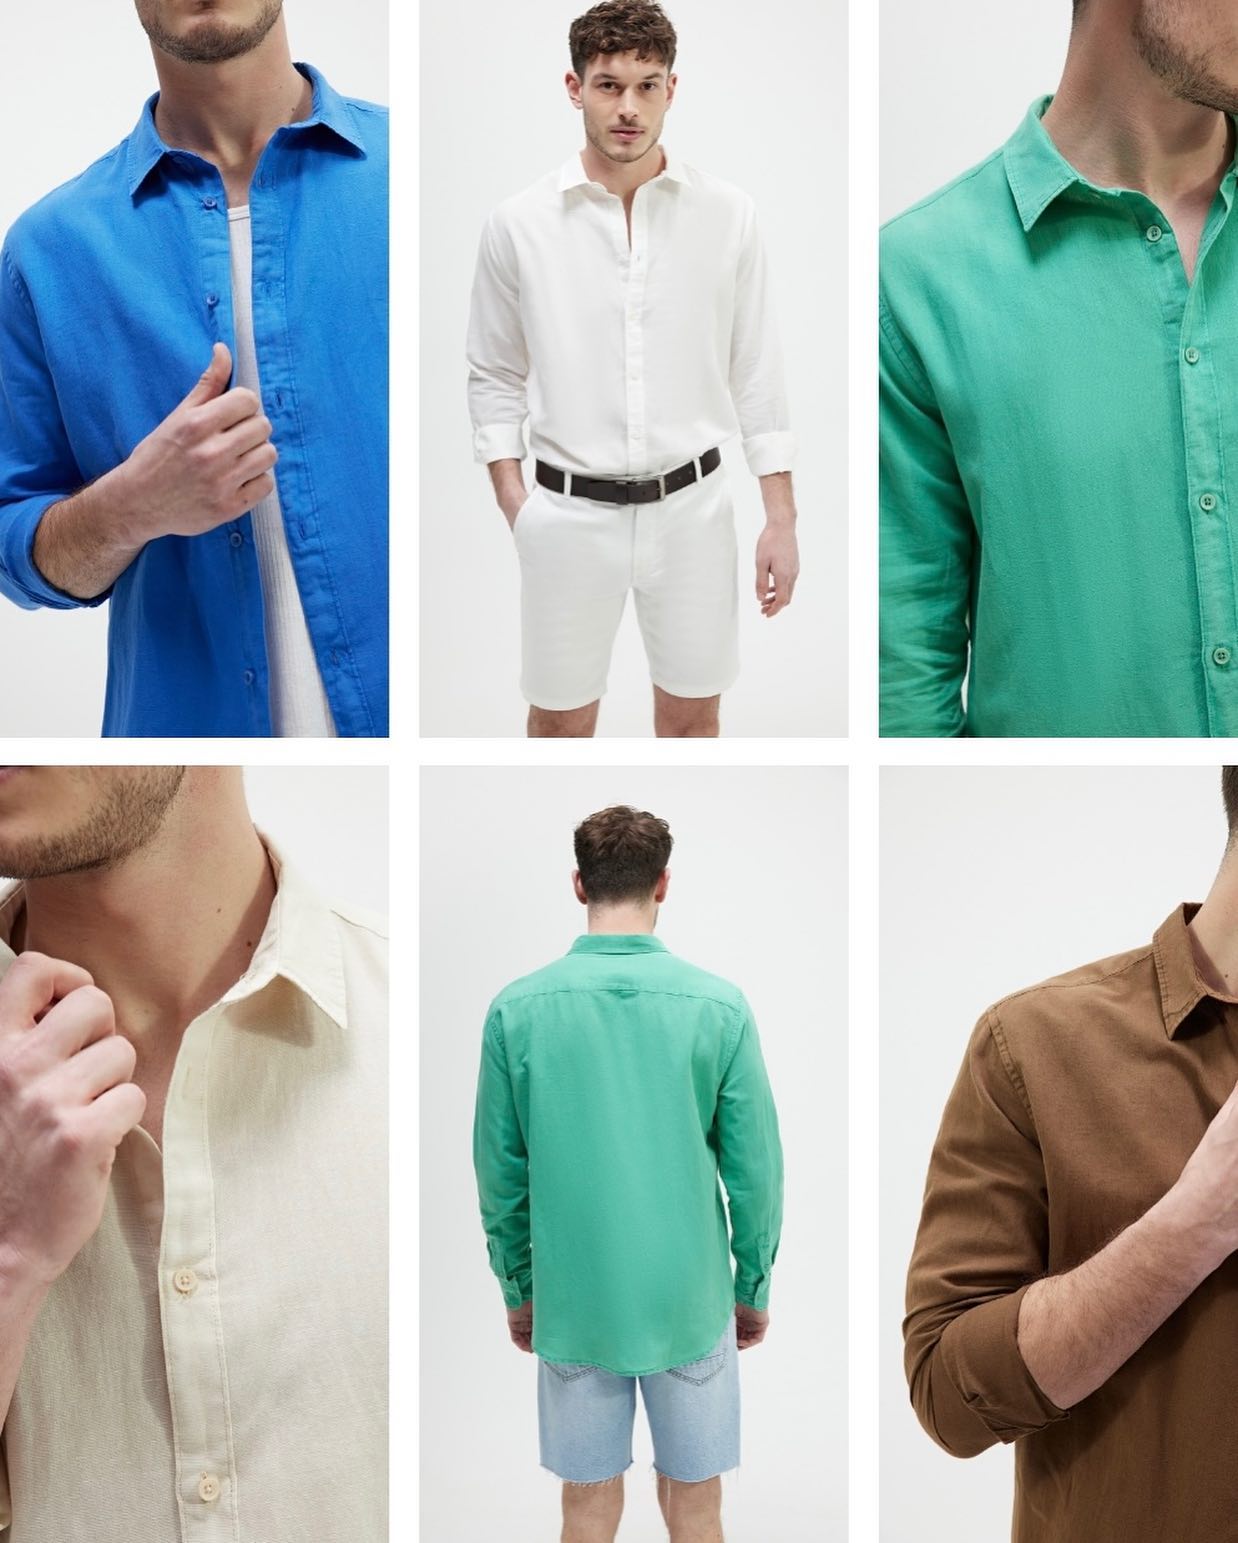 Choose Your Color | New Collection חולצות פשתן לגברים במגוון צבעים נחתו בחנויות ובאתר #CastroFashion, בוא לבחור את האחת שלך.